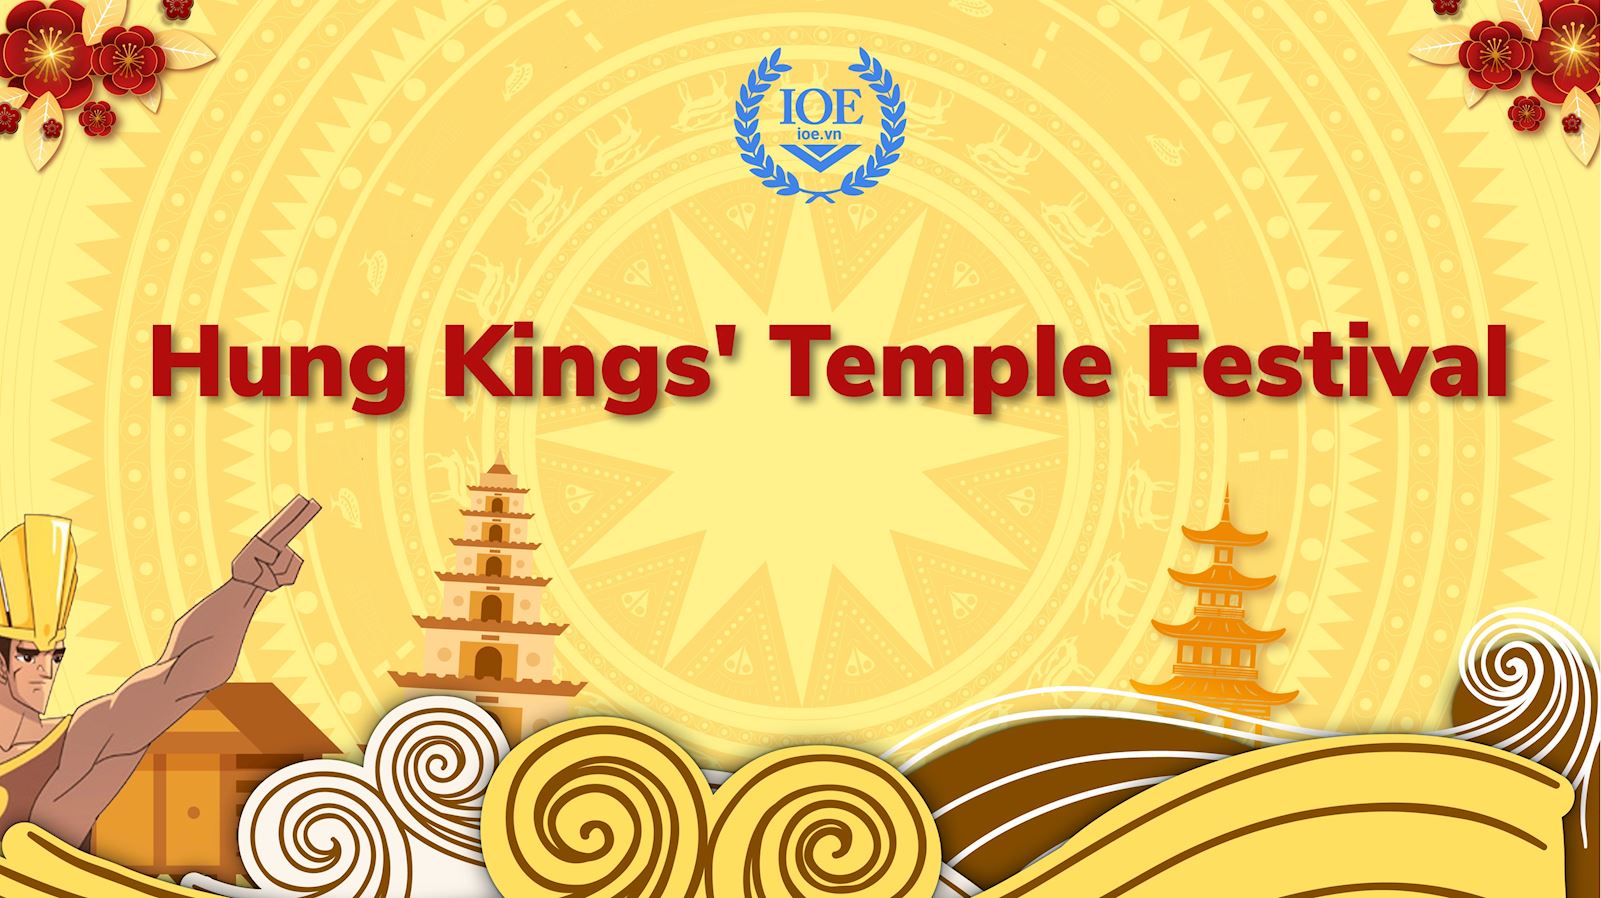 Hung Kings’ Temple Festival